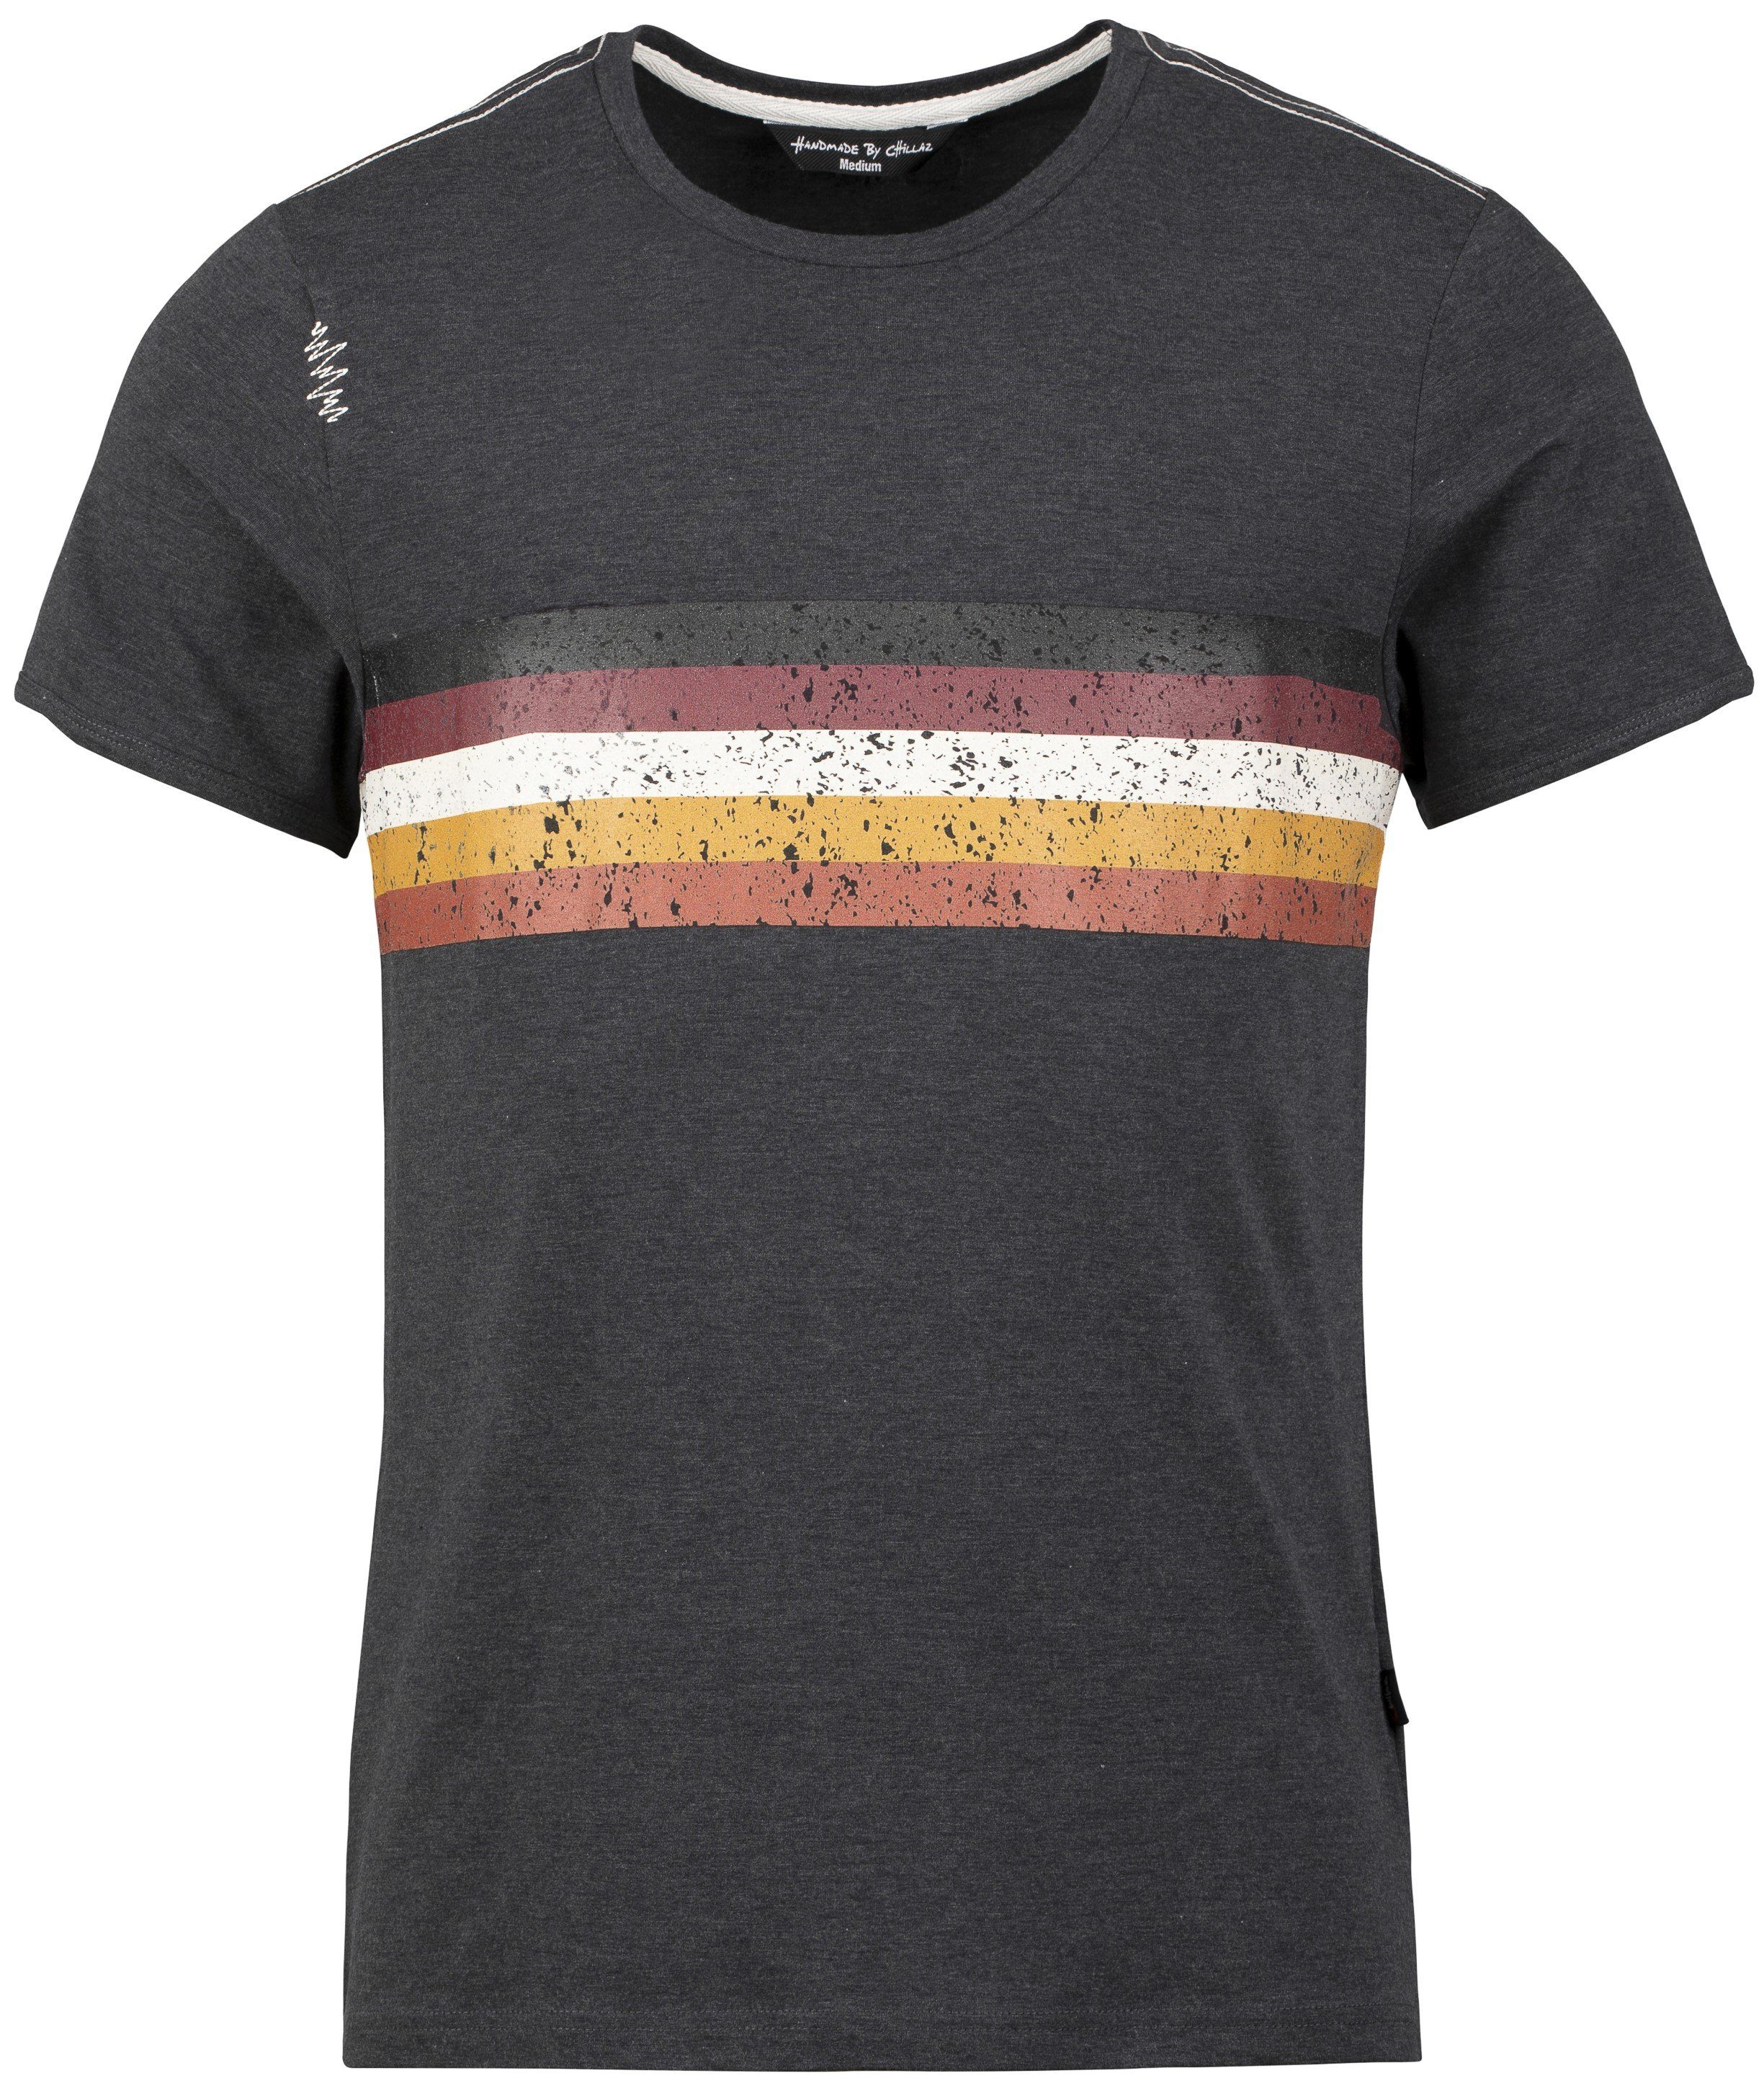 Chillaz T-Shirt Stripes Grunge T-Shirt